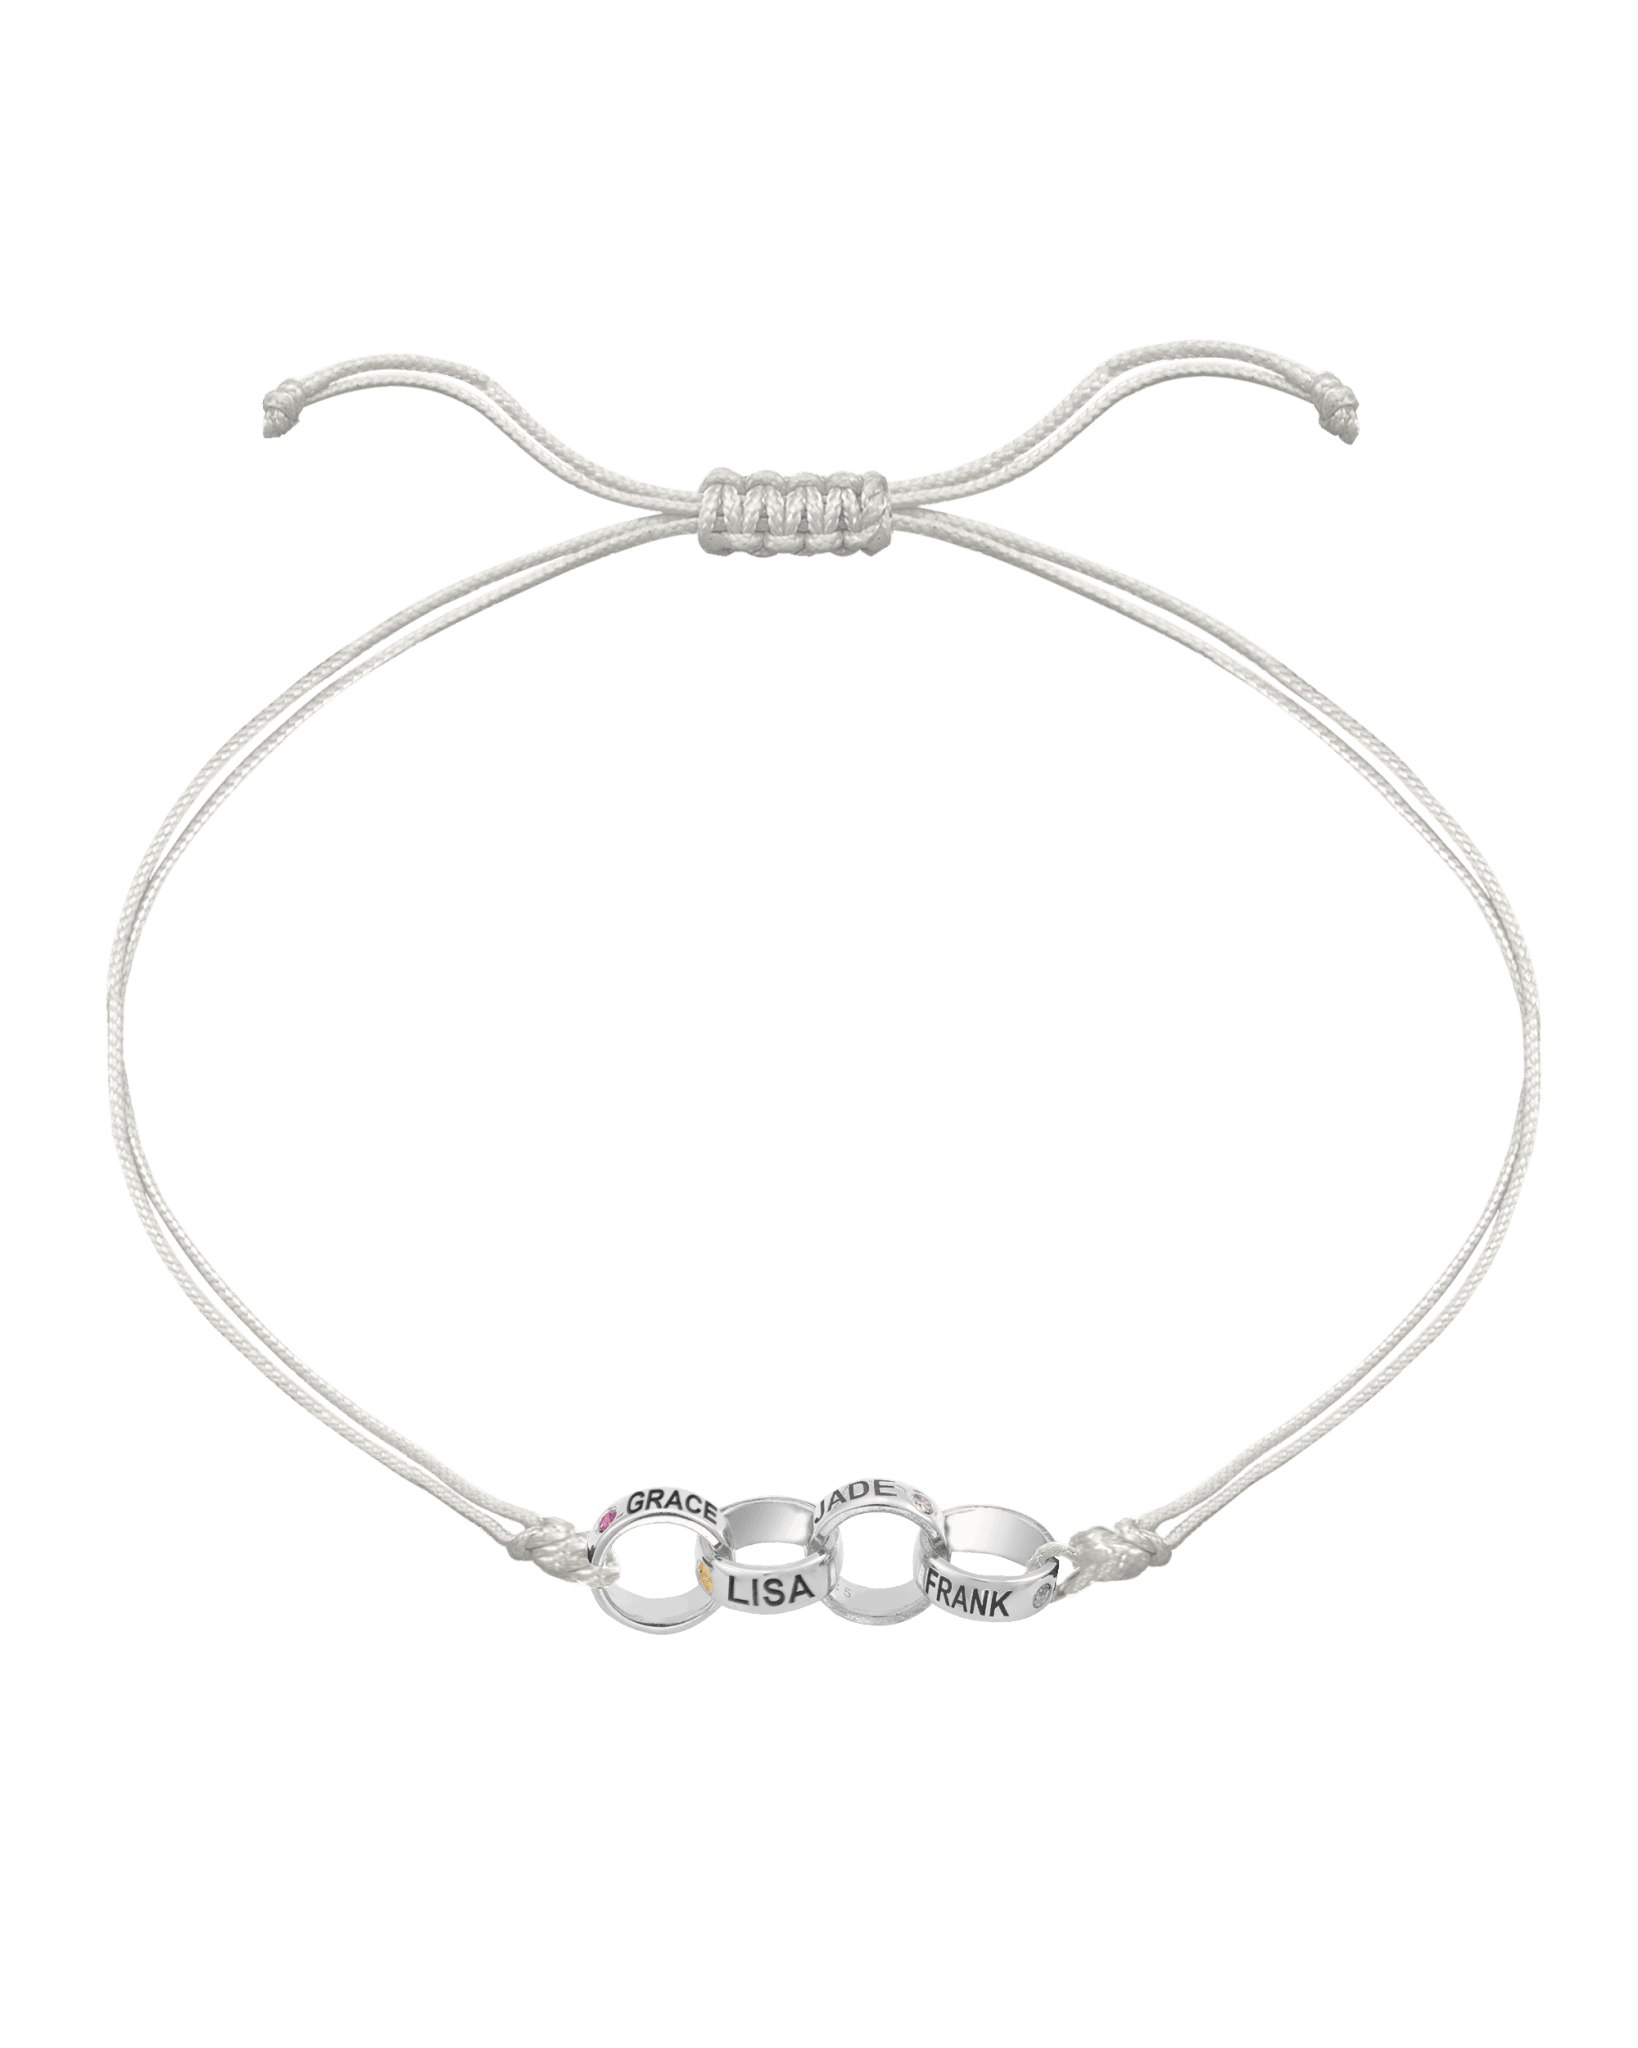 Engravable Links of Love - 925 Sterling Silver Bracelets magal-dev 4 Pearl 